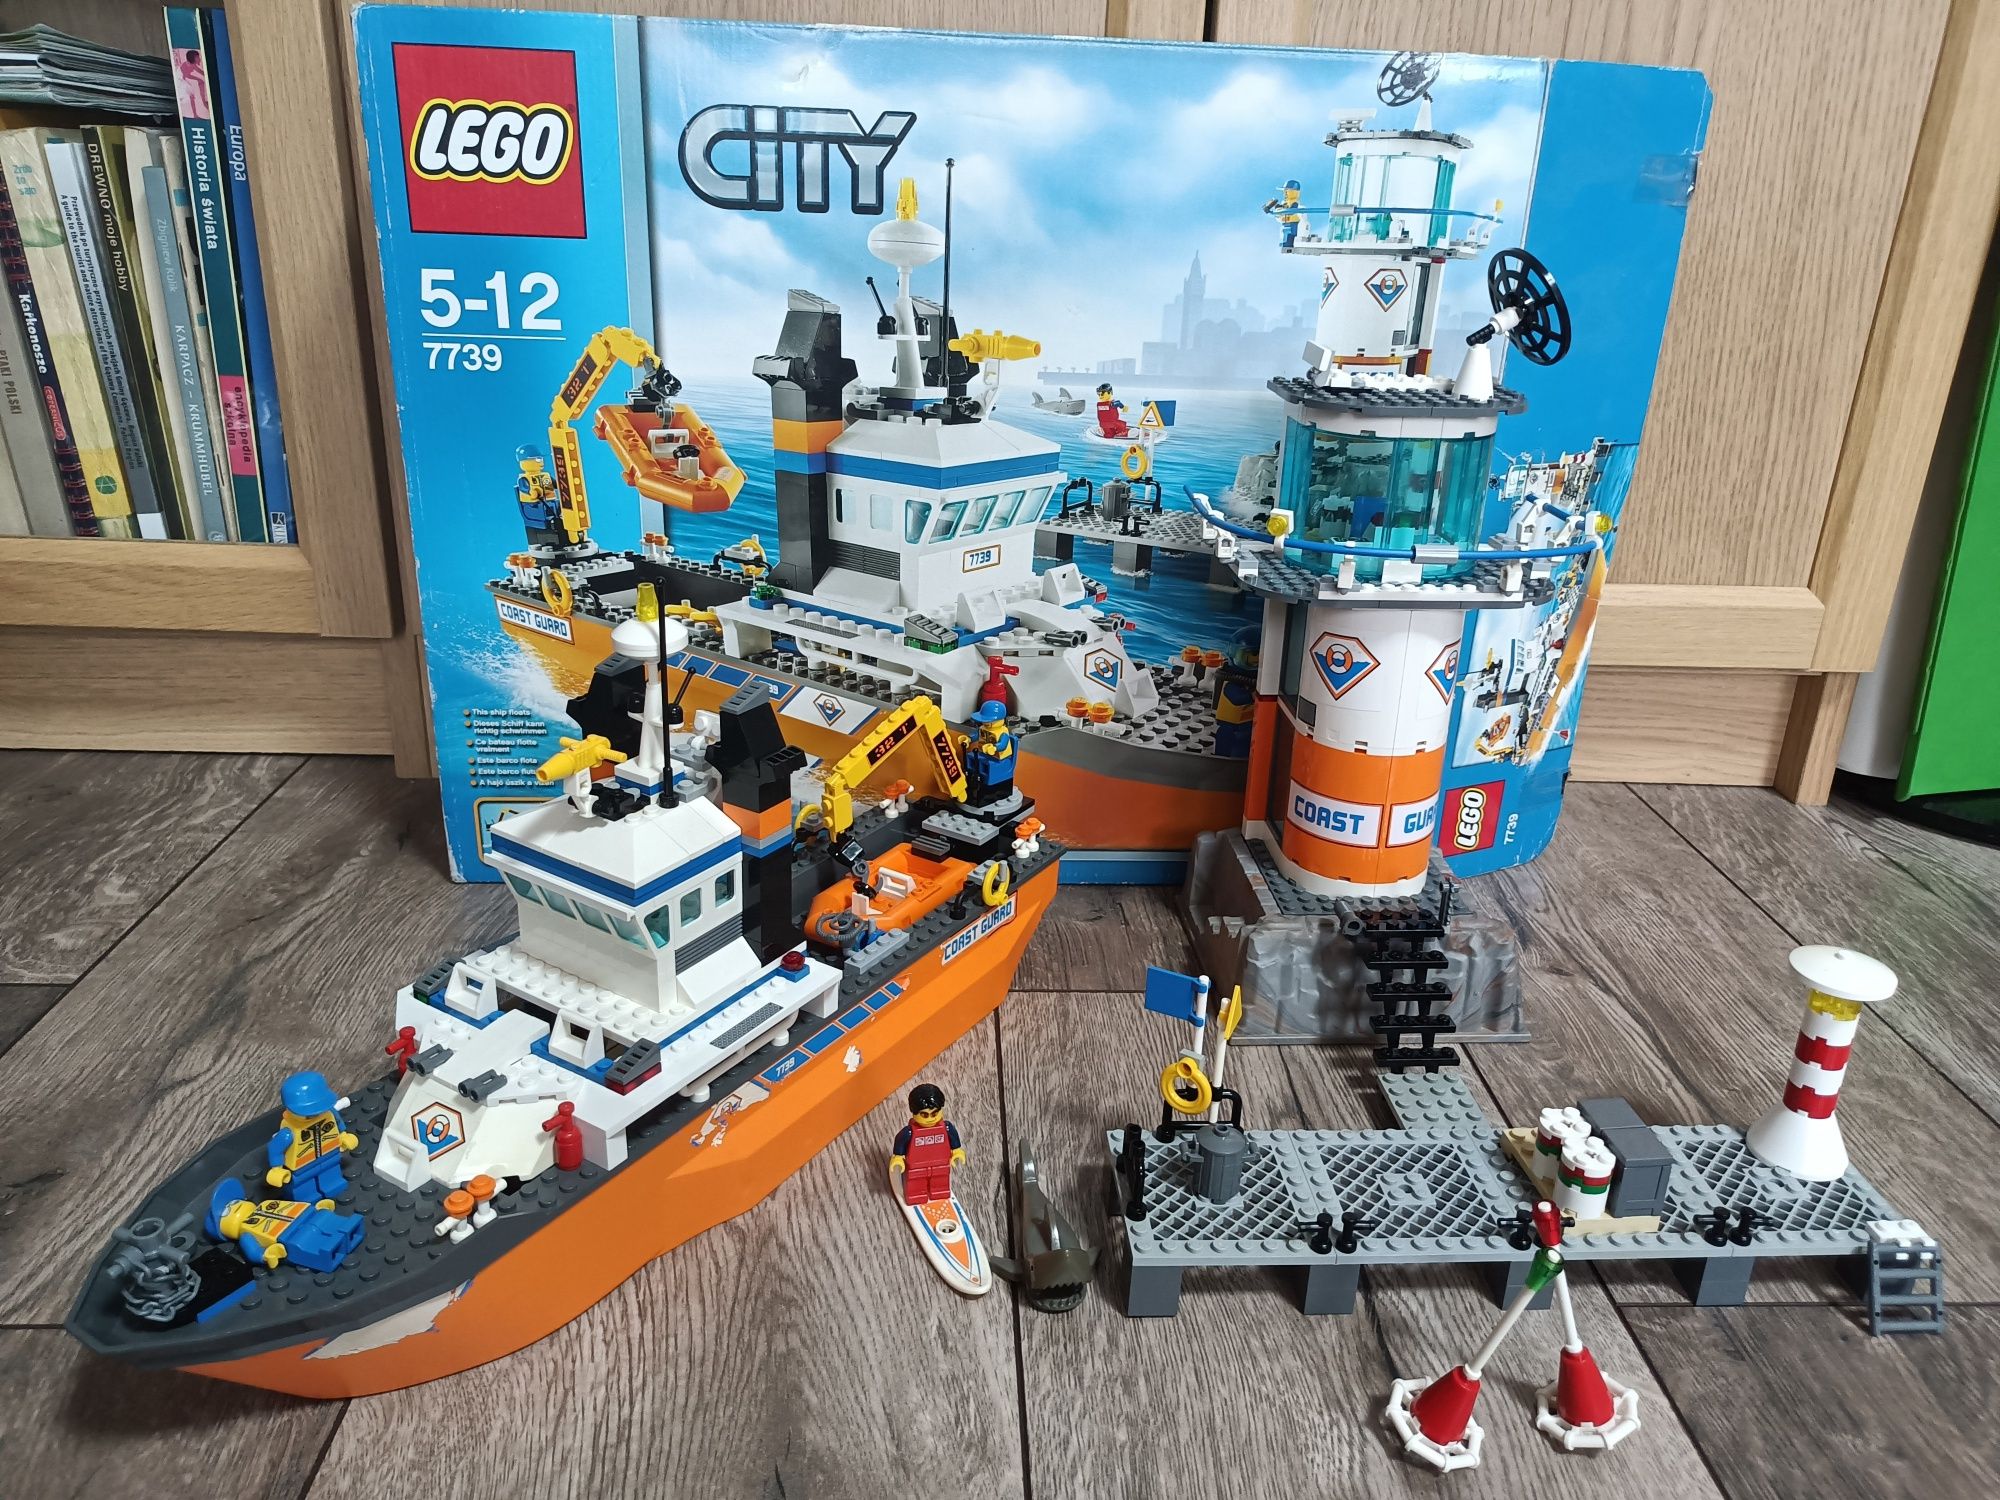 Zestaw LEGO City 7739